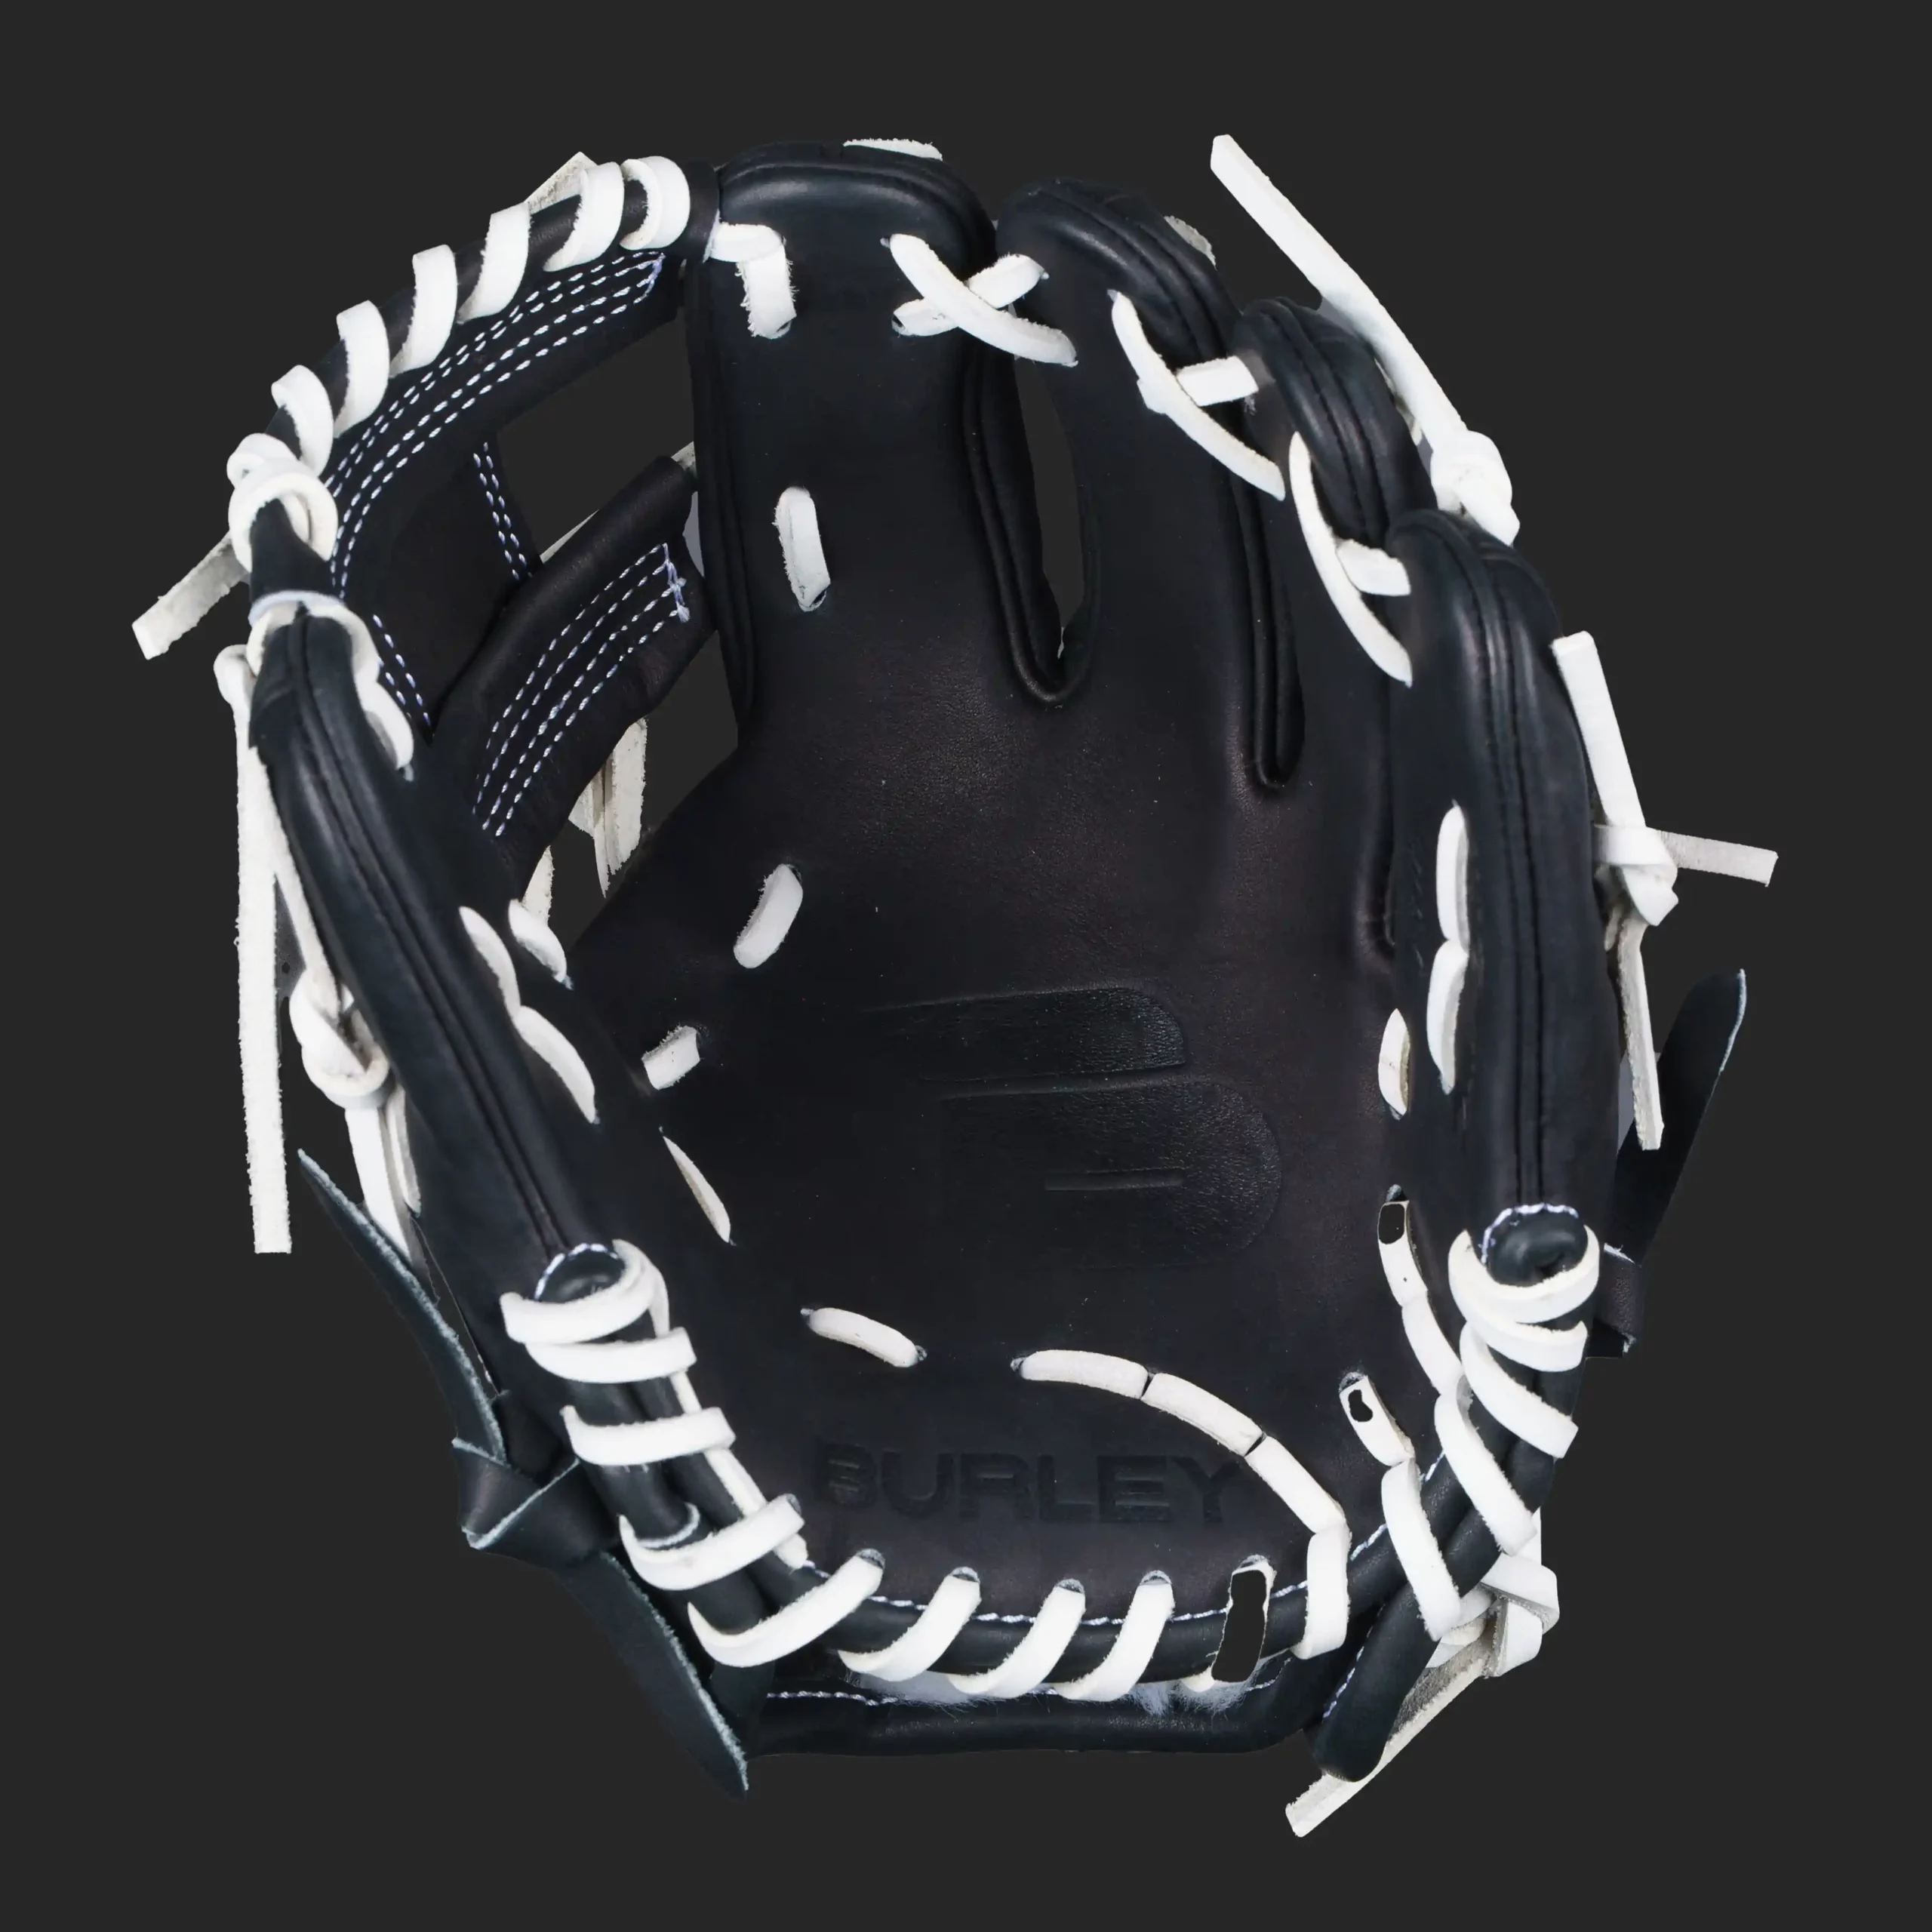 pro series training glove black white laces i web right 1